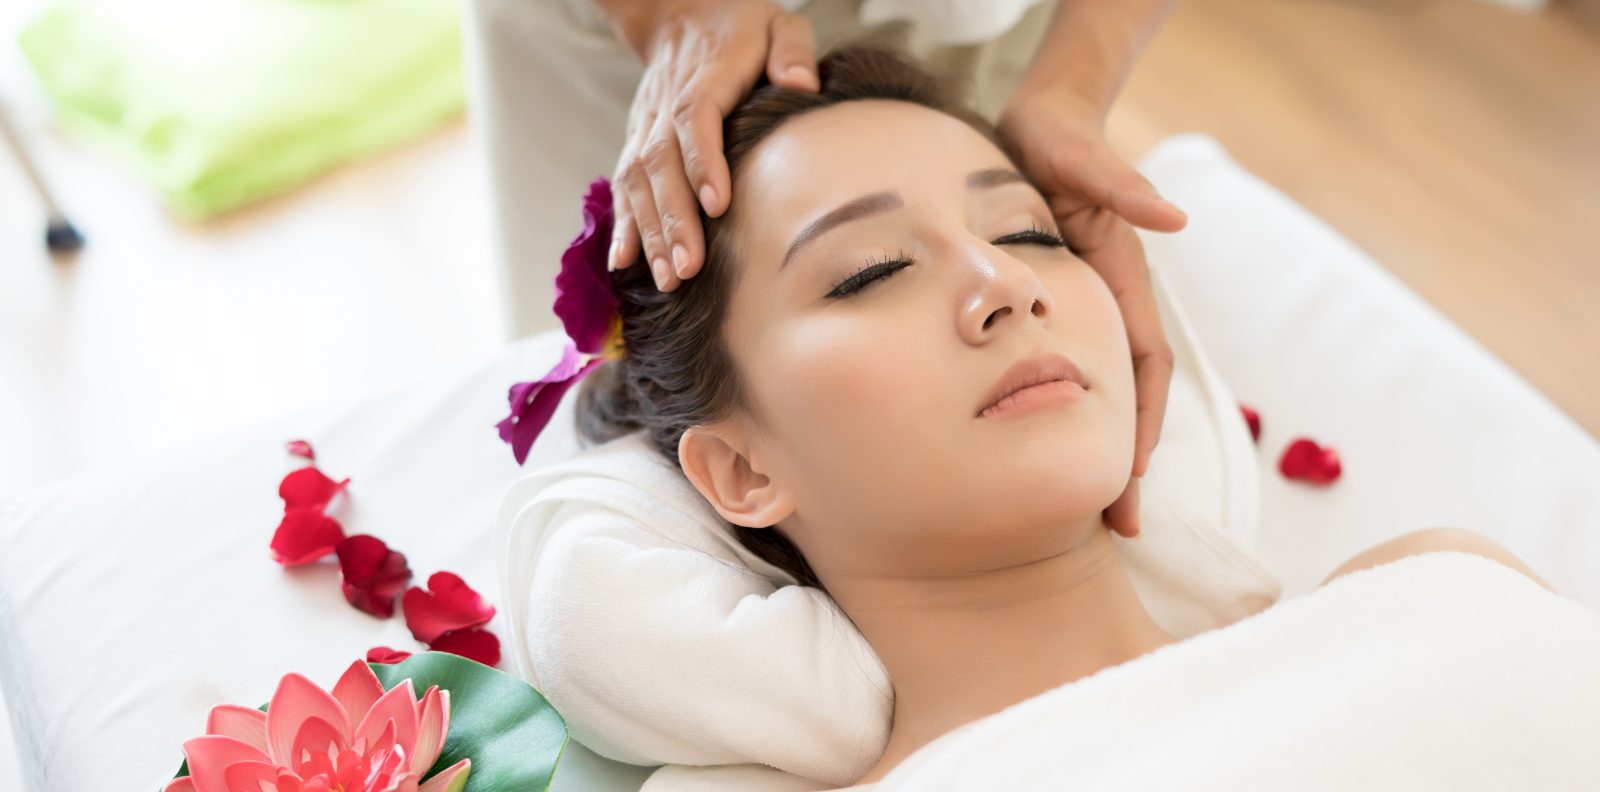 Massage benefits -Outcall Asian Massage- Hotel Room Massage-24 Hour Las Vegas Massage